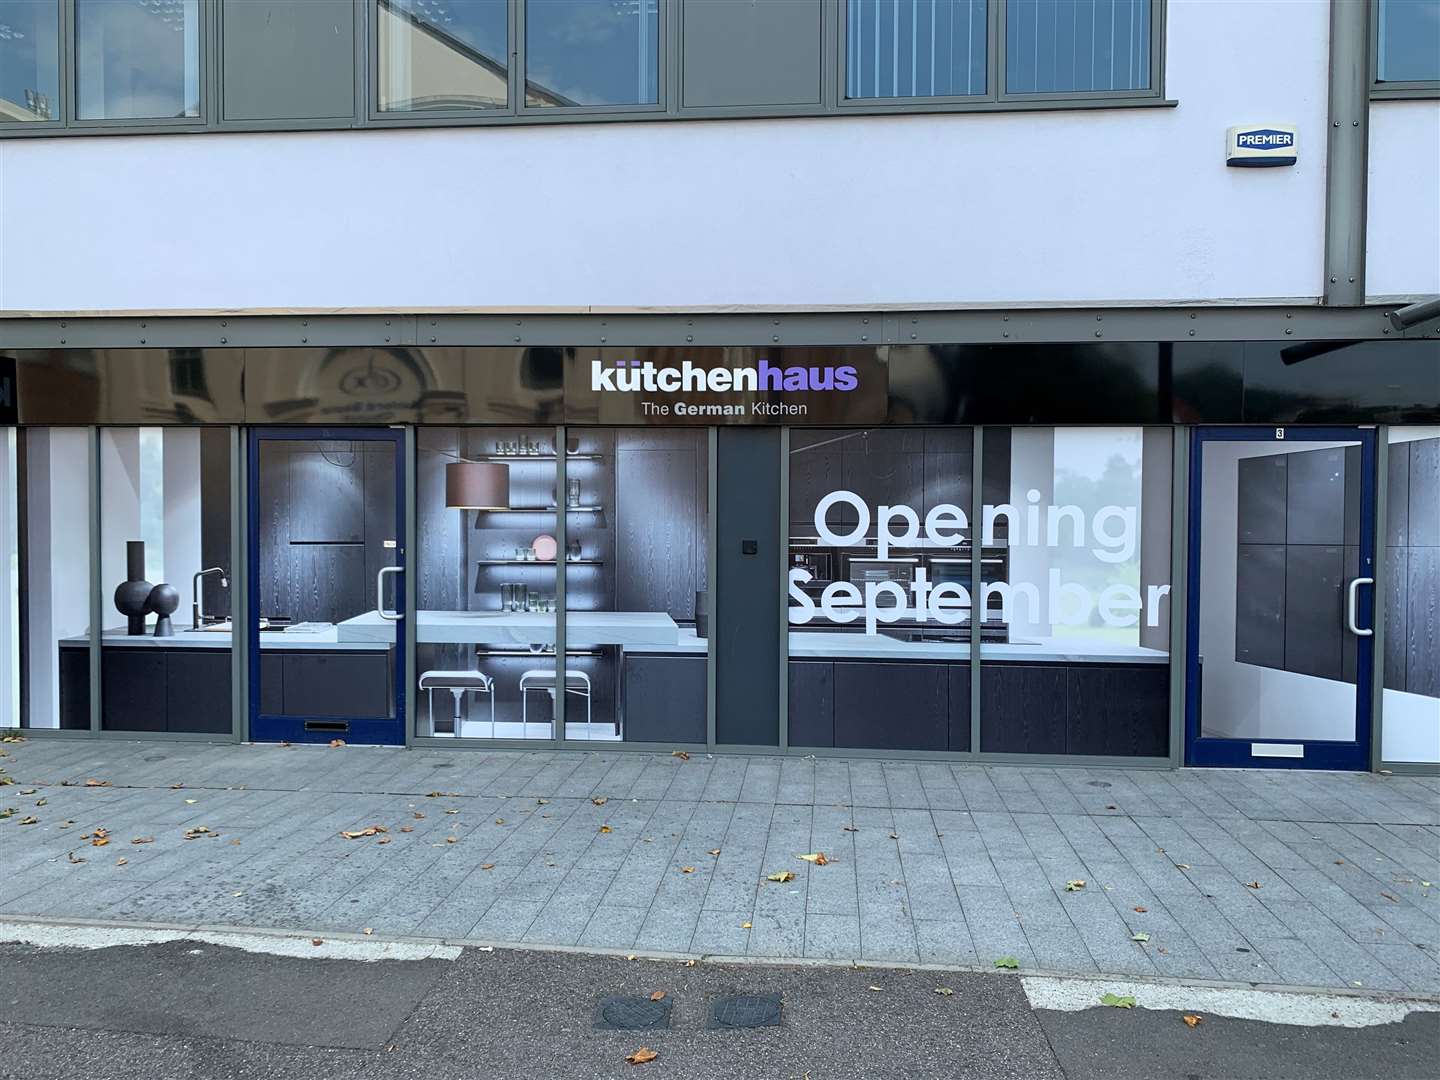 Kutchenhaus will be opening its second Kent store on September 1